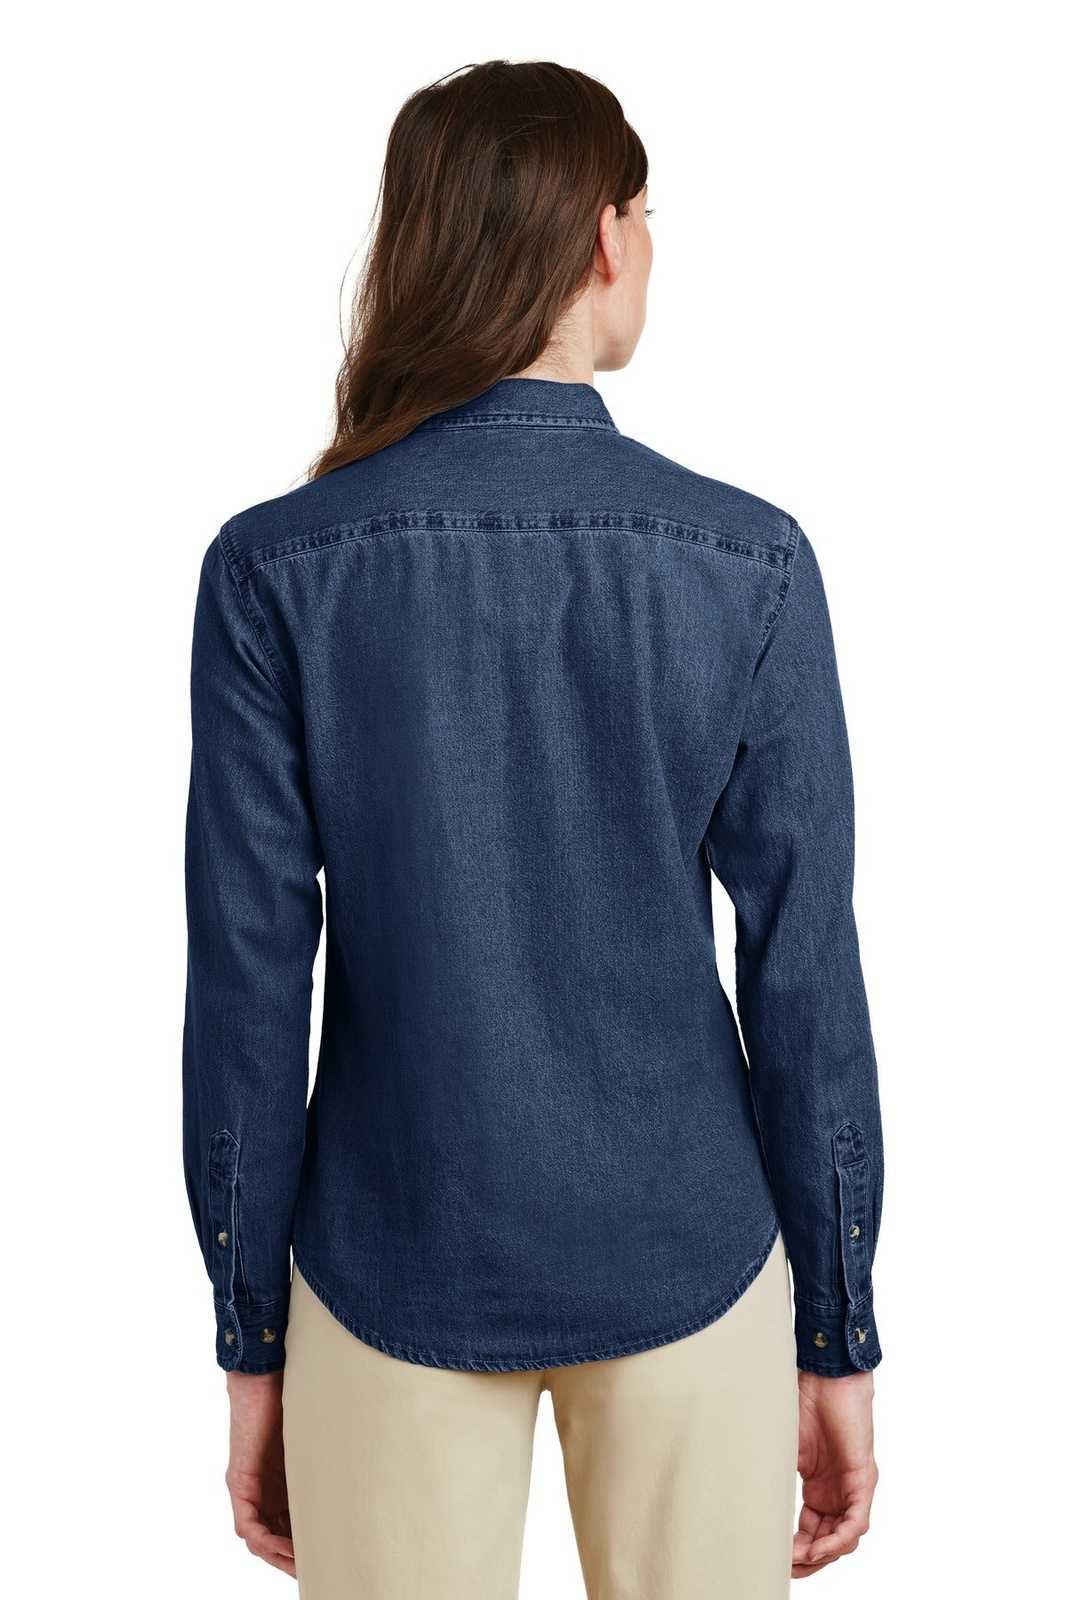 Port &amp; Company LSP10 Ladies Long Sleeve Value Denim Shirt - Ink Blue - HIT a Double - 2